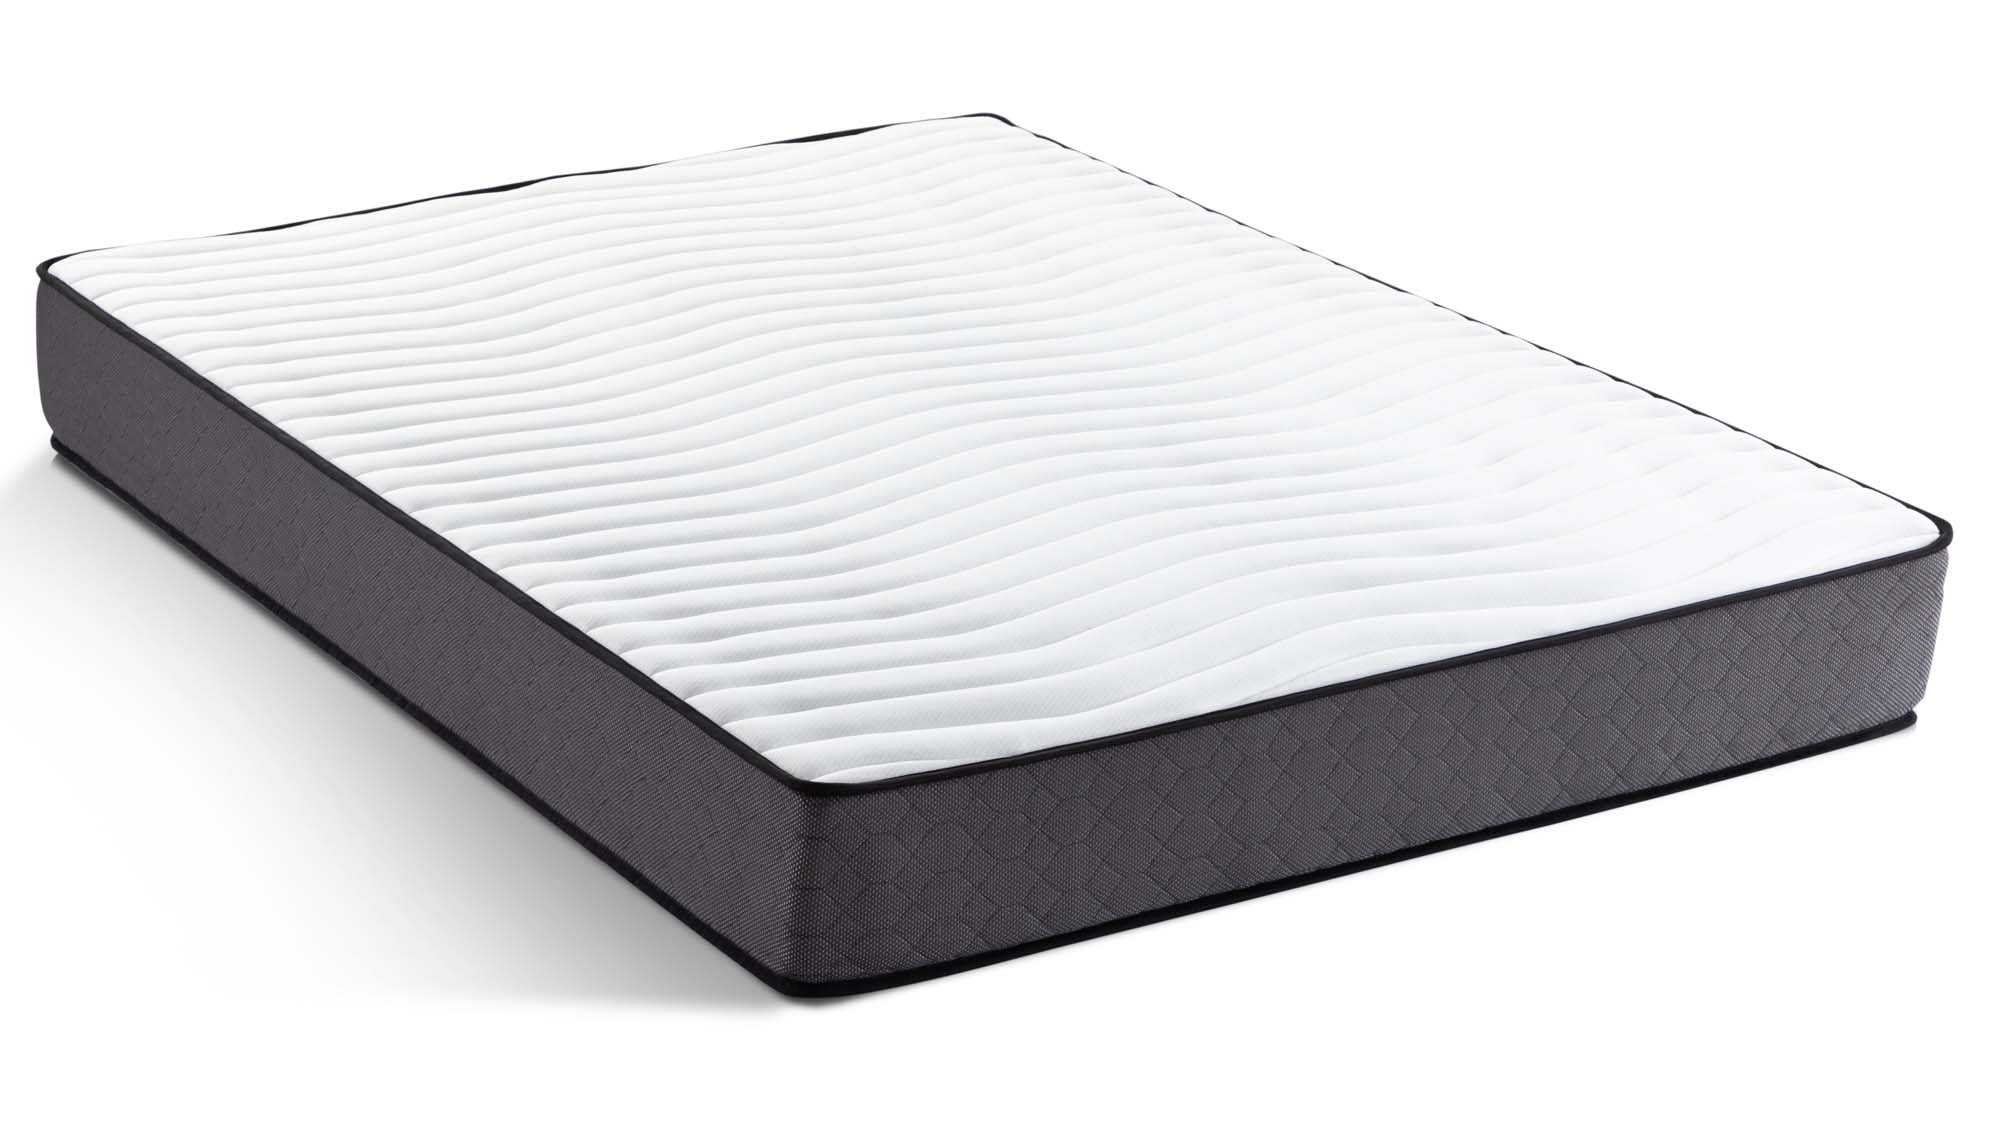 10 inch firm twin mattress